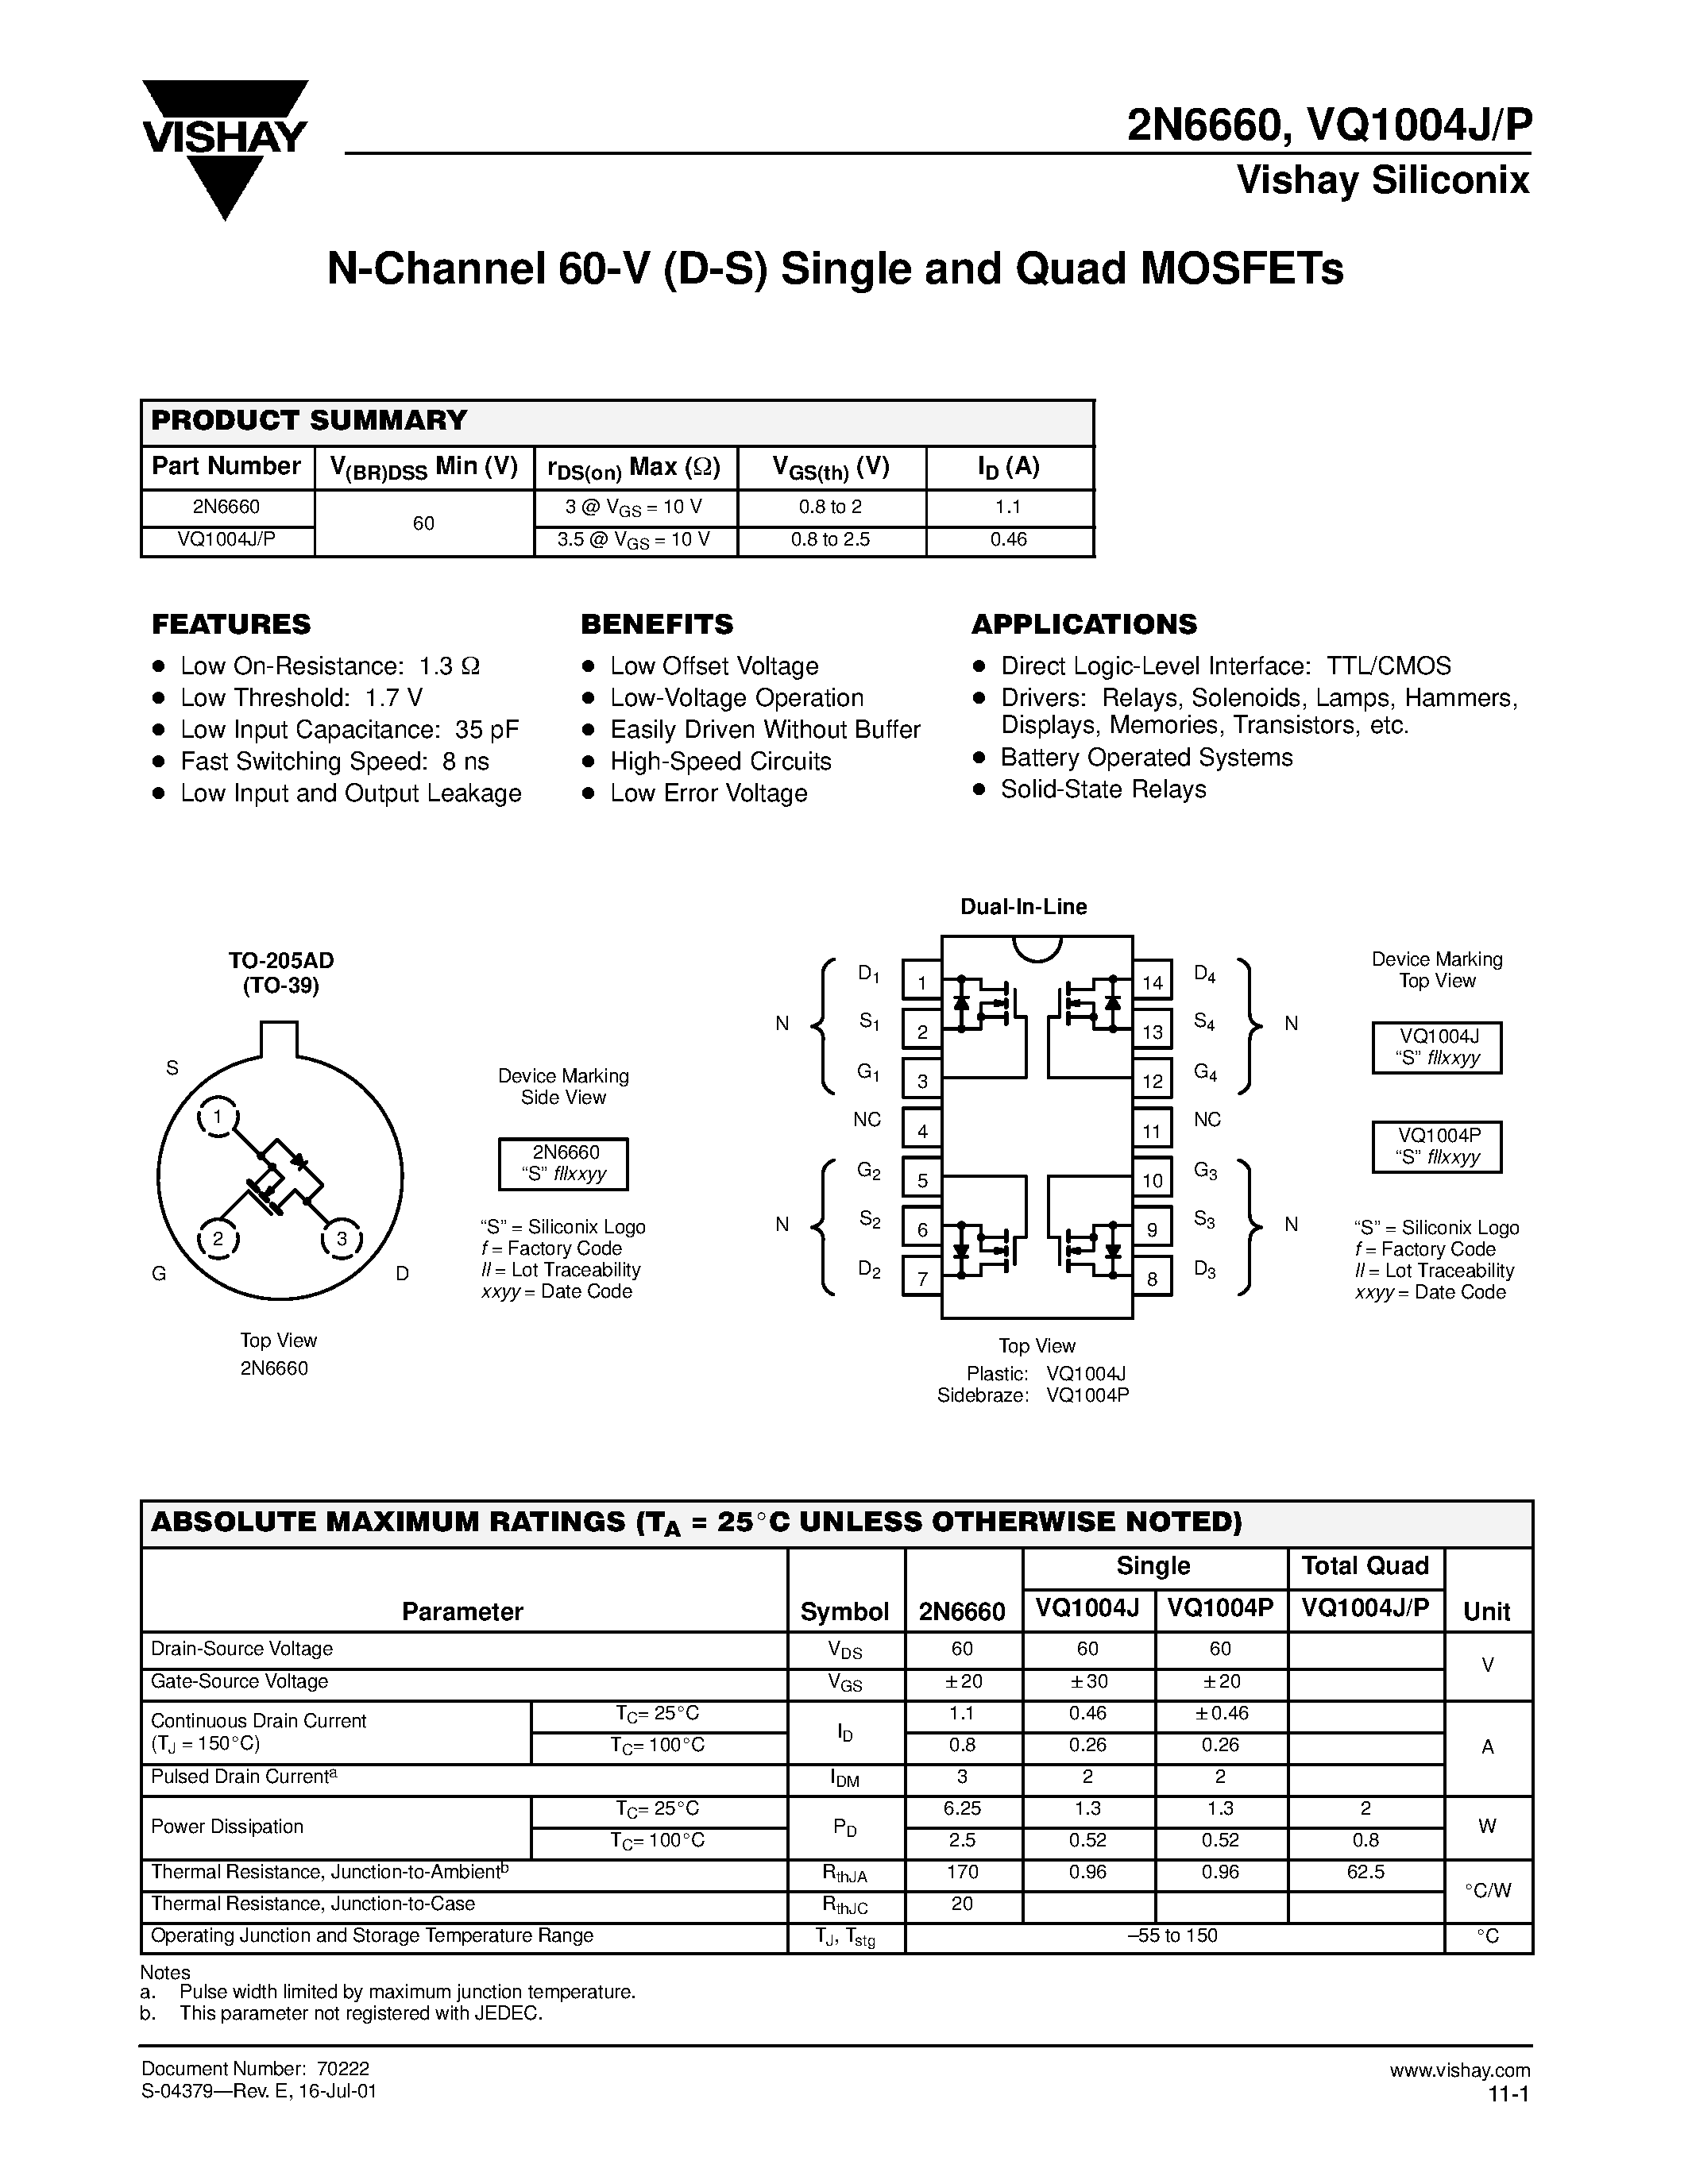 Даташит VQ1004J - N-Channel 60-V (D-S) Single and Quad MOSFETs страница 1